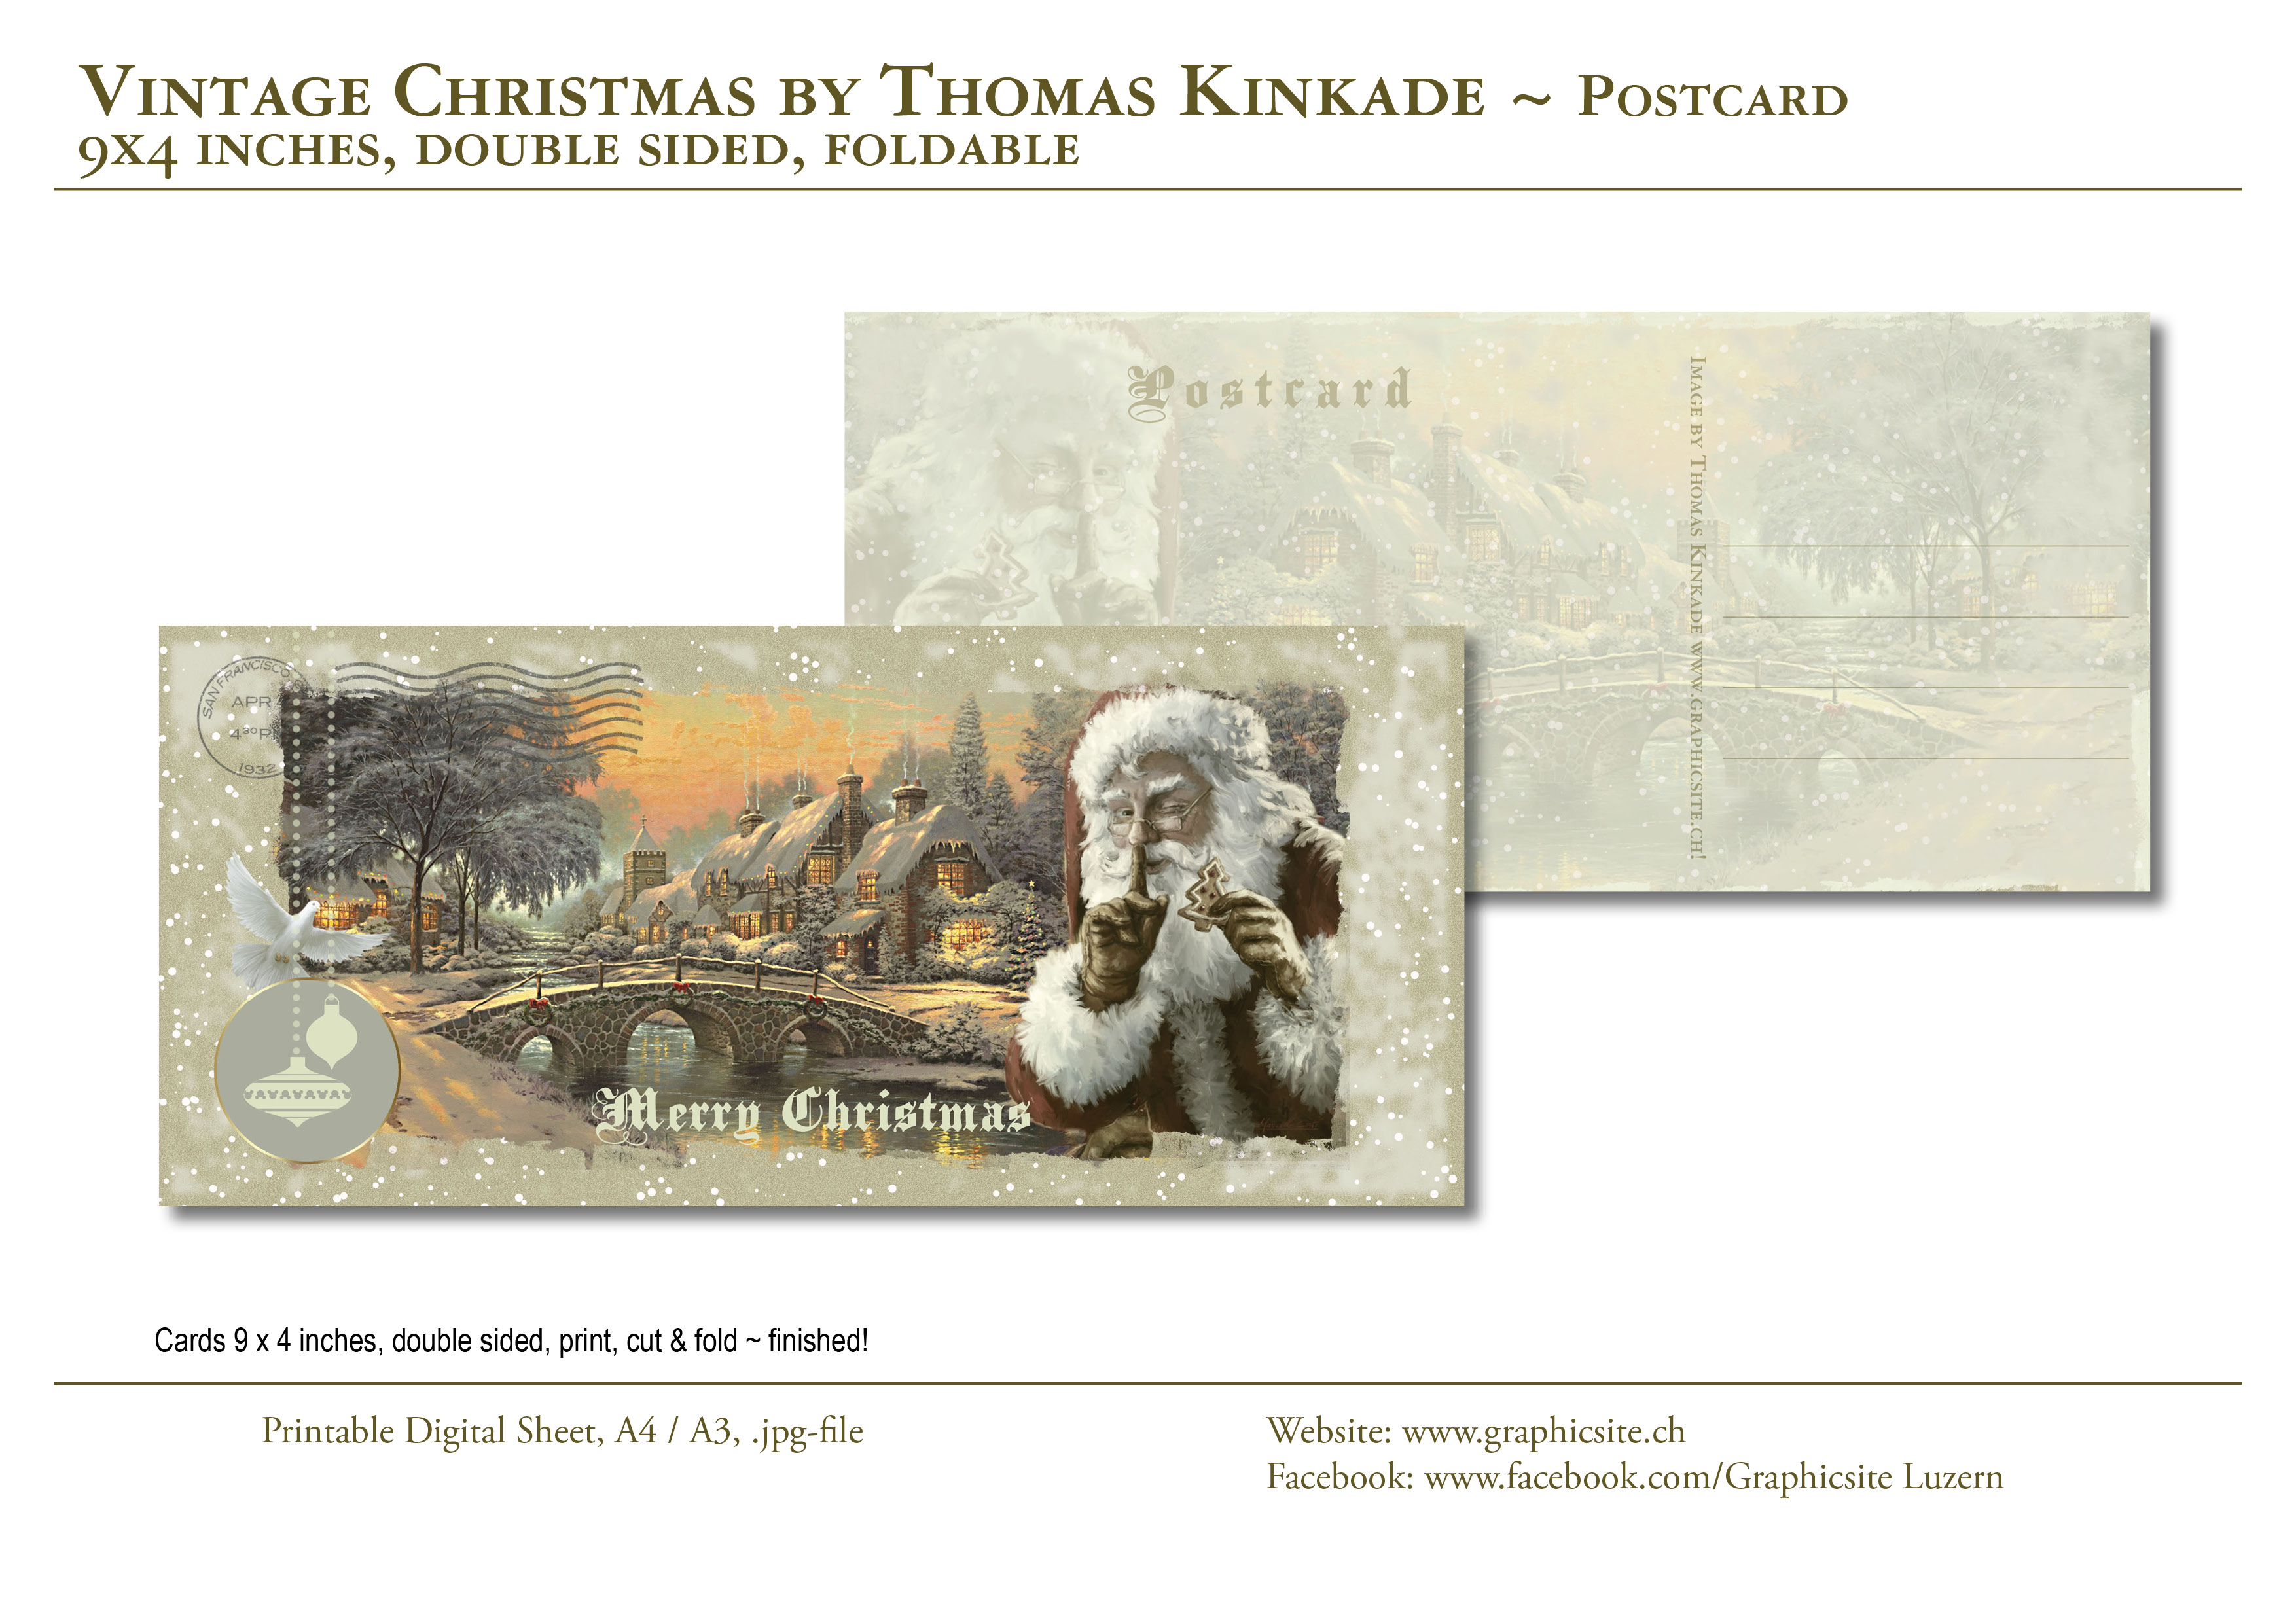 Printable Digital Sheets, Postcard, Christmas, Vintage, Santa Clause, Thomas Kinkade, Winter, Scenery, Landscape, Snow,